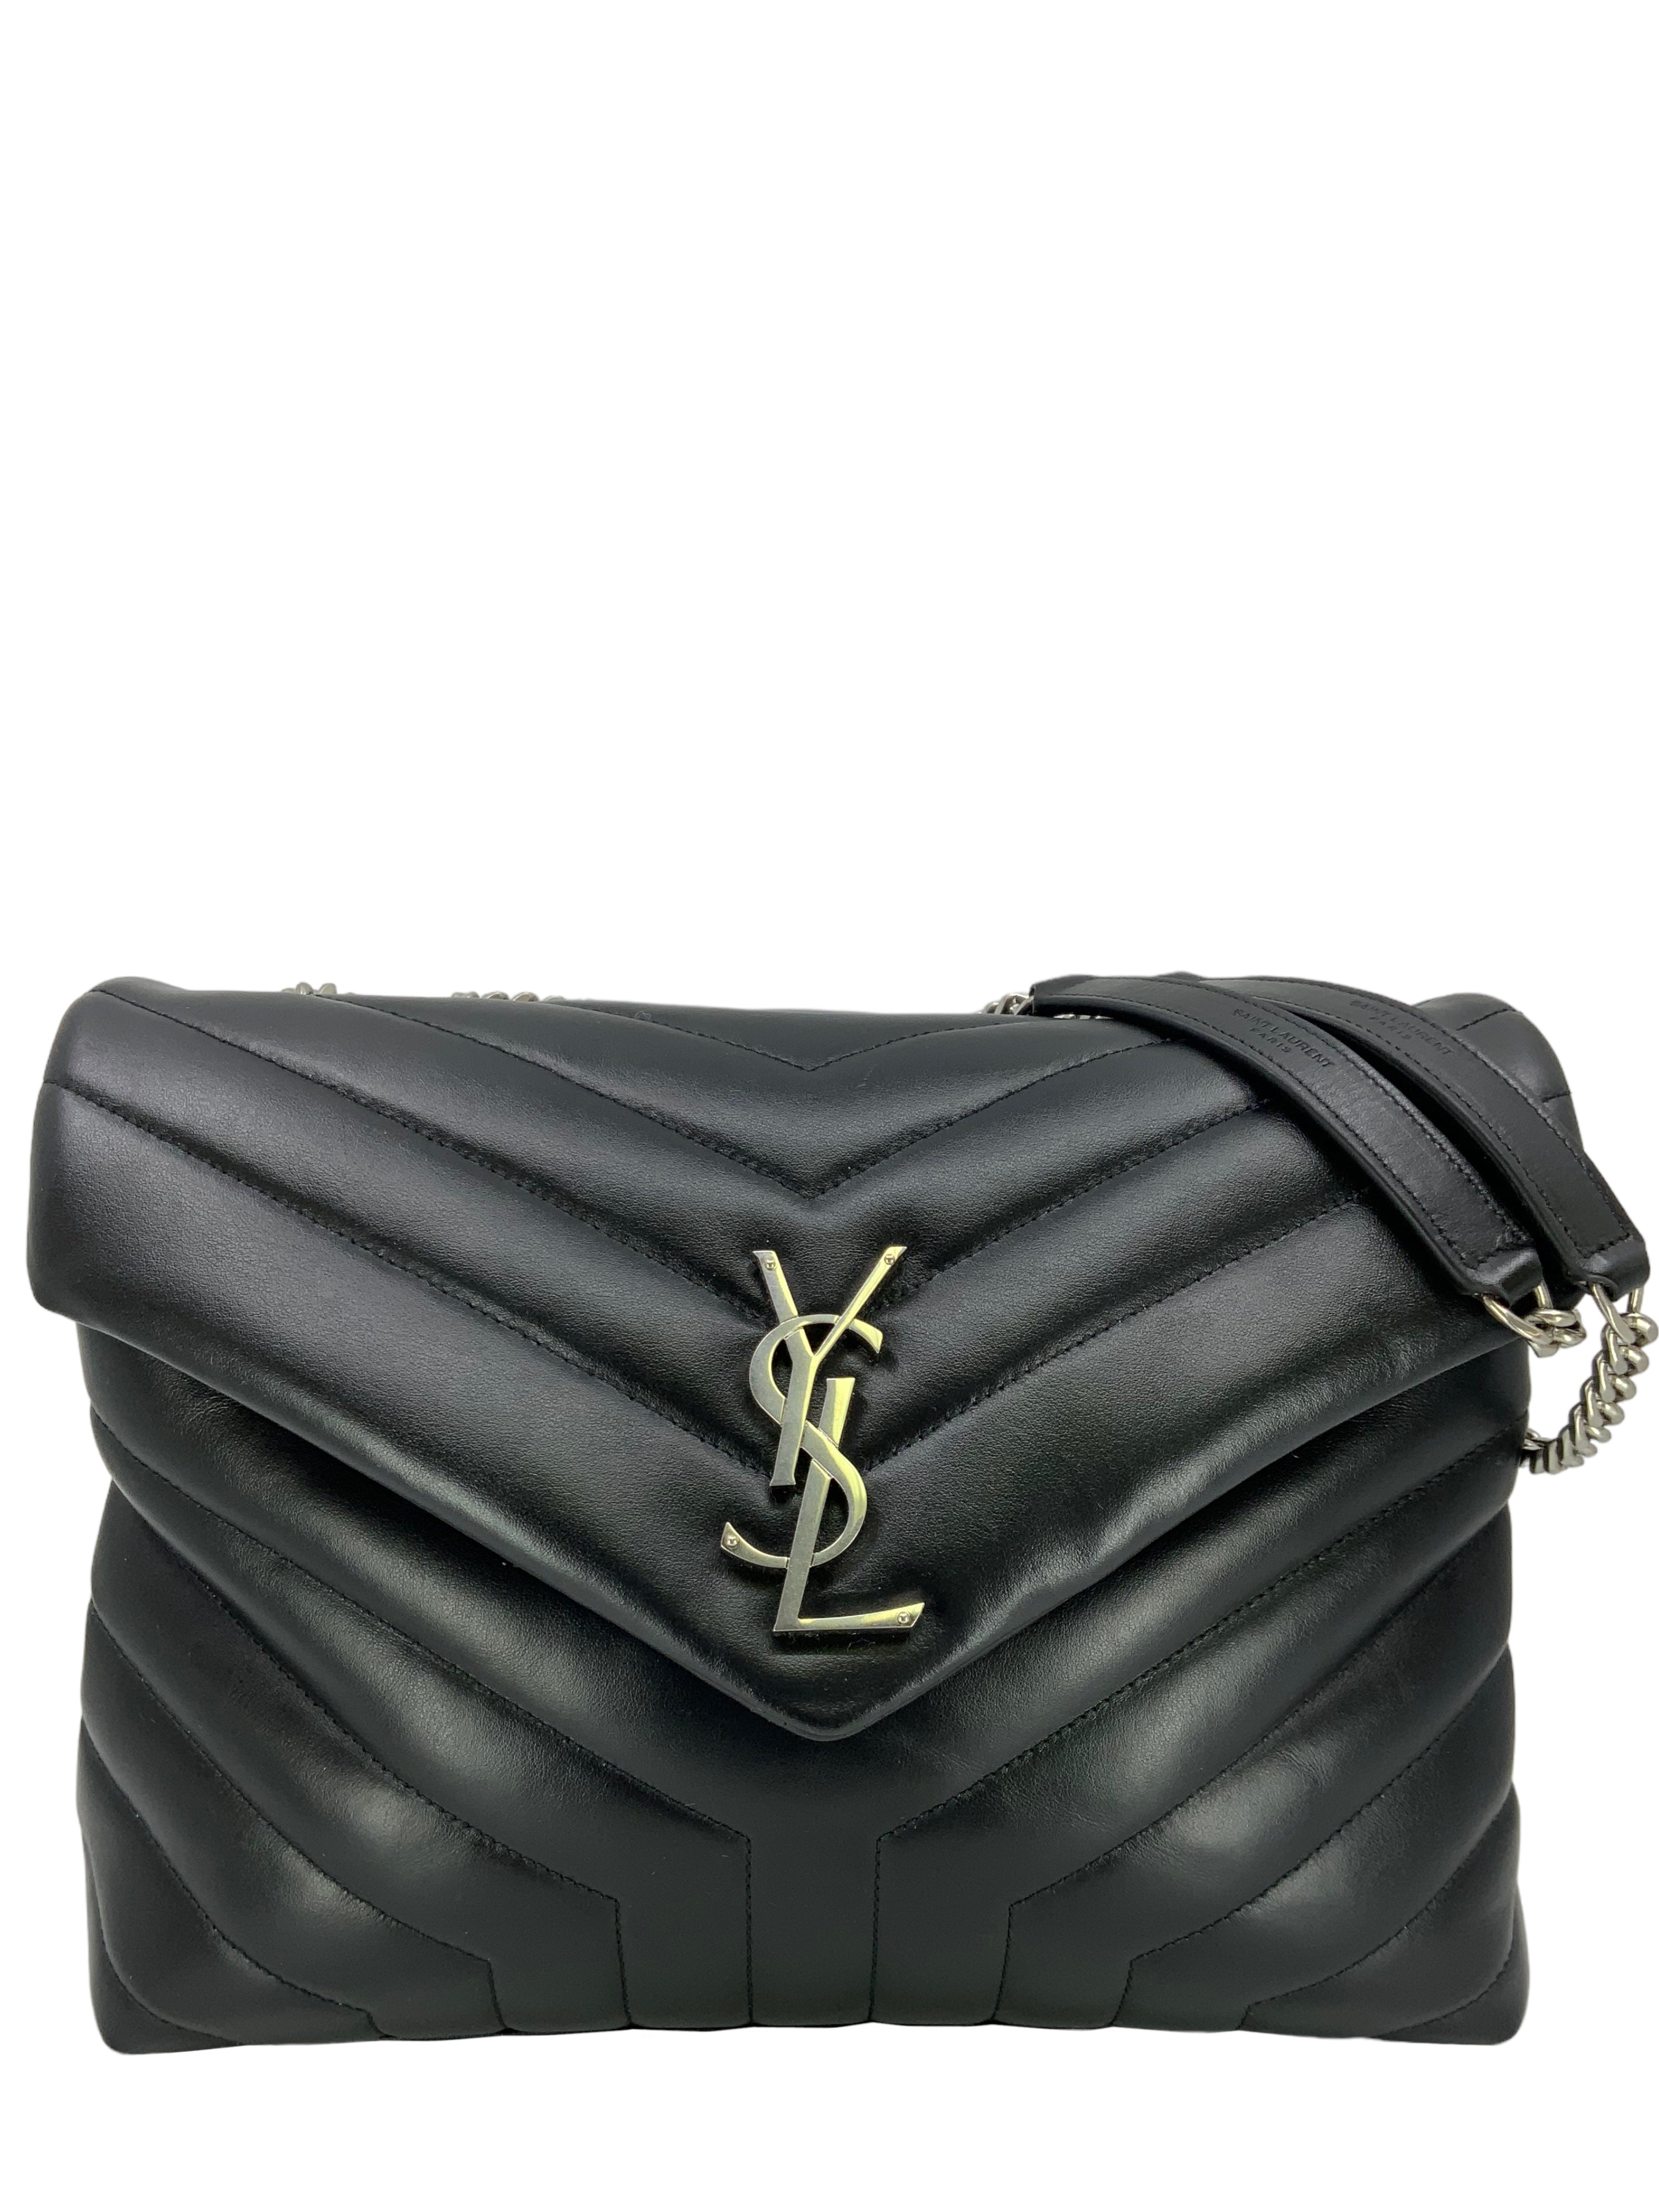 Yves Saint Laurent Black Quilted Leather Toy LouLou Shoulder Bag